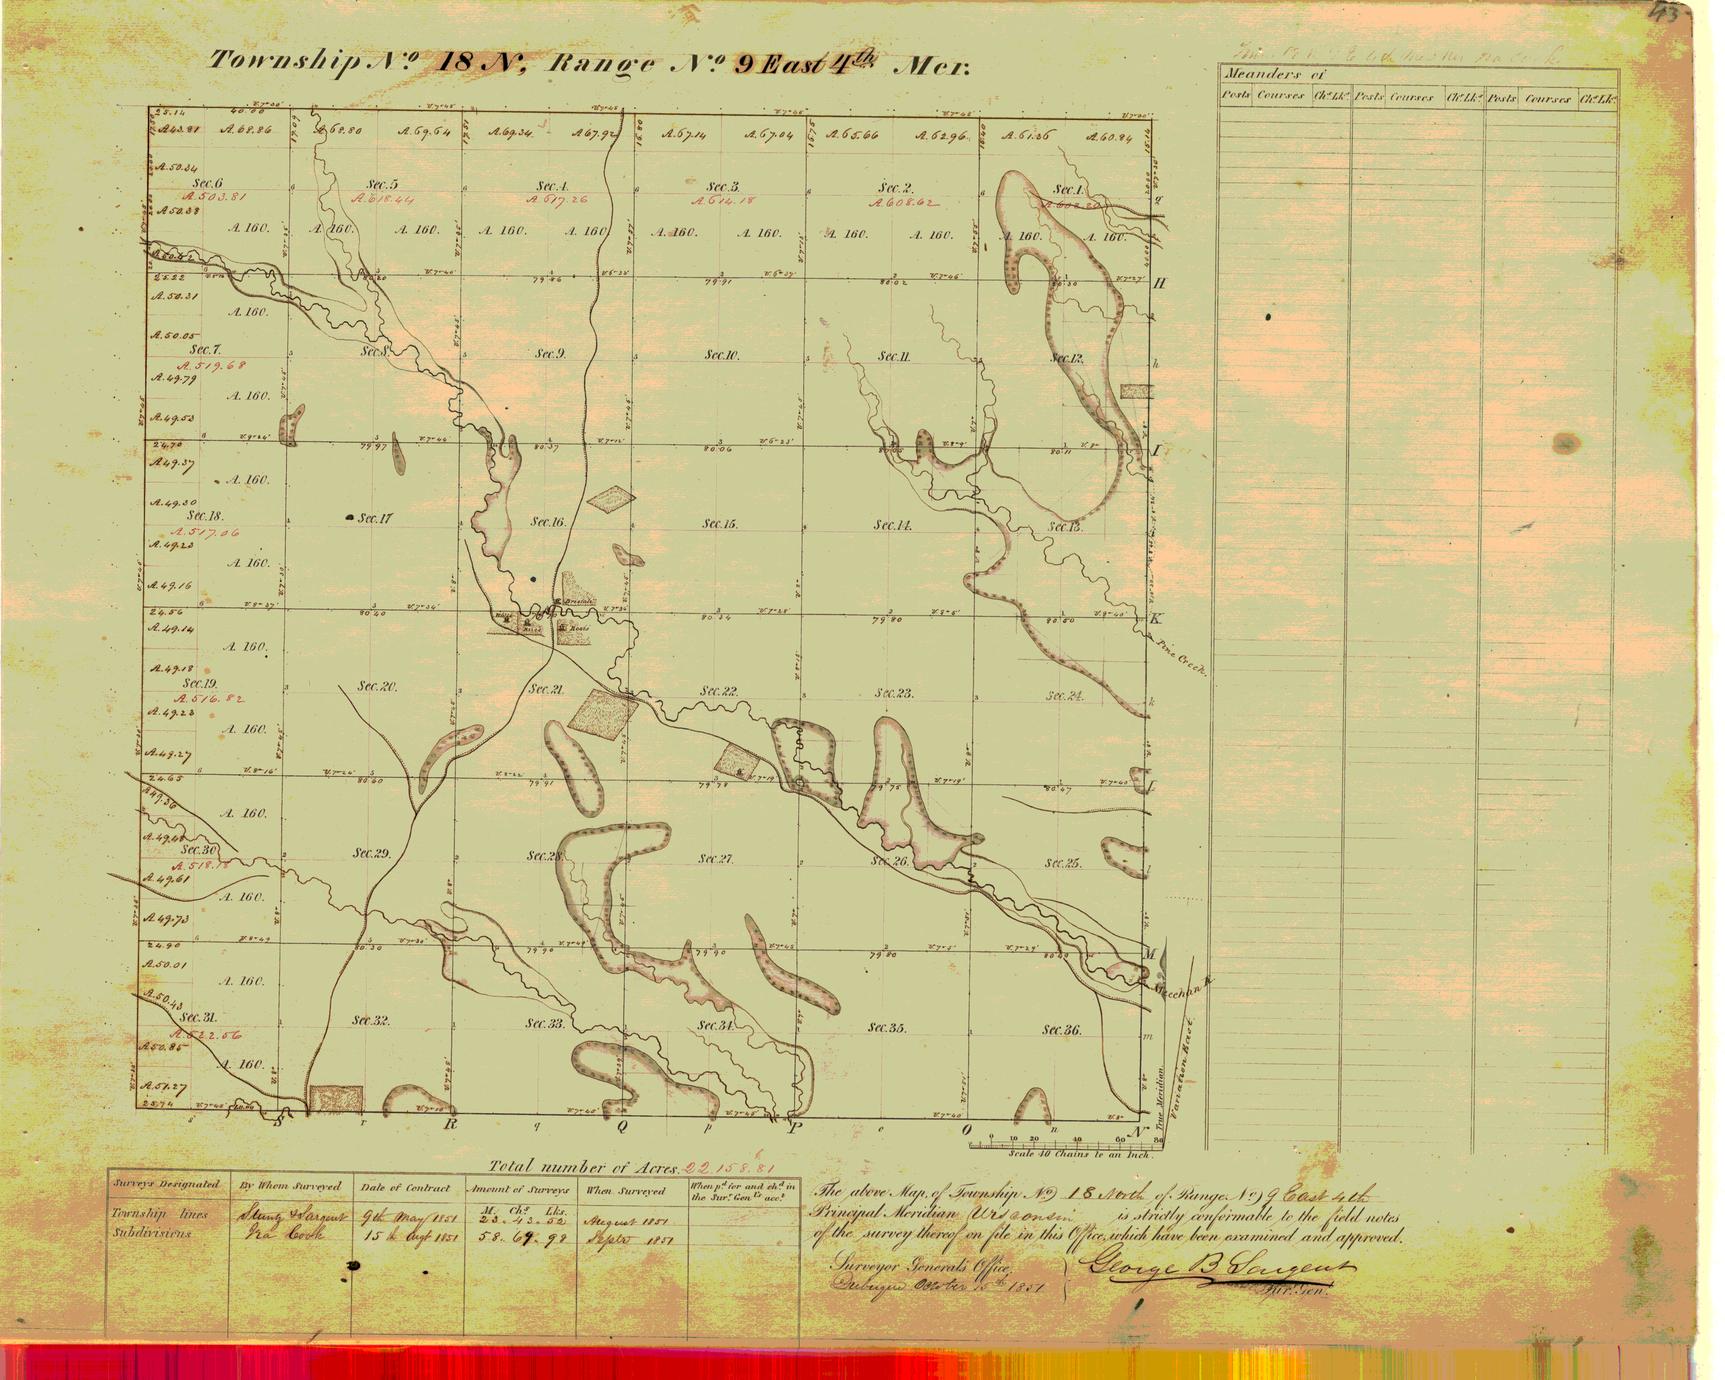 [Public Land Survey System map: Wisconsin Township 18 North, Range 09 East]